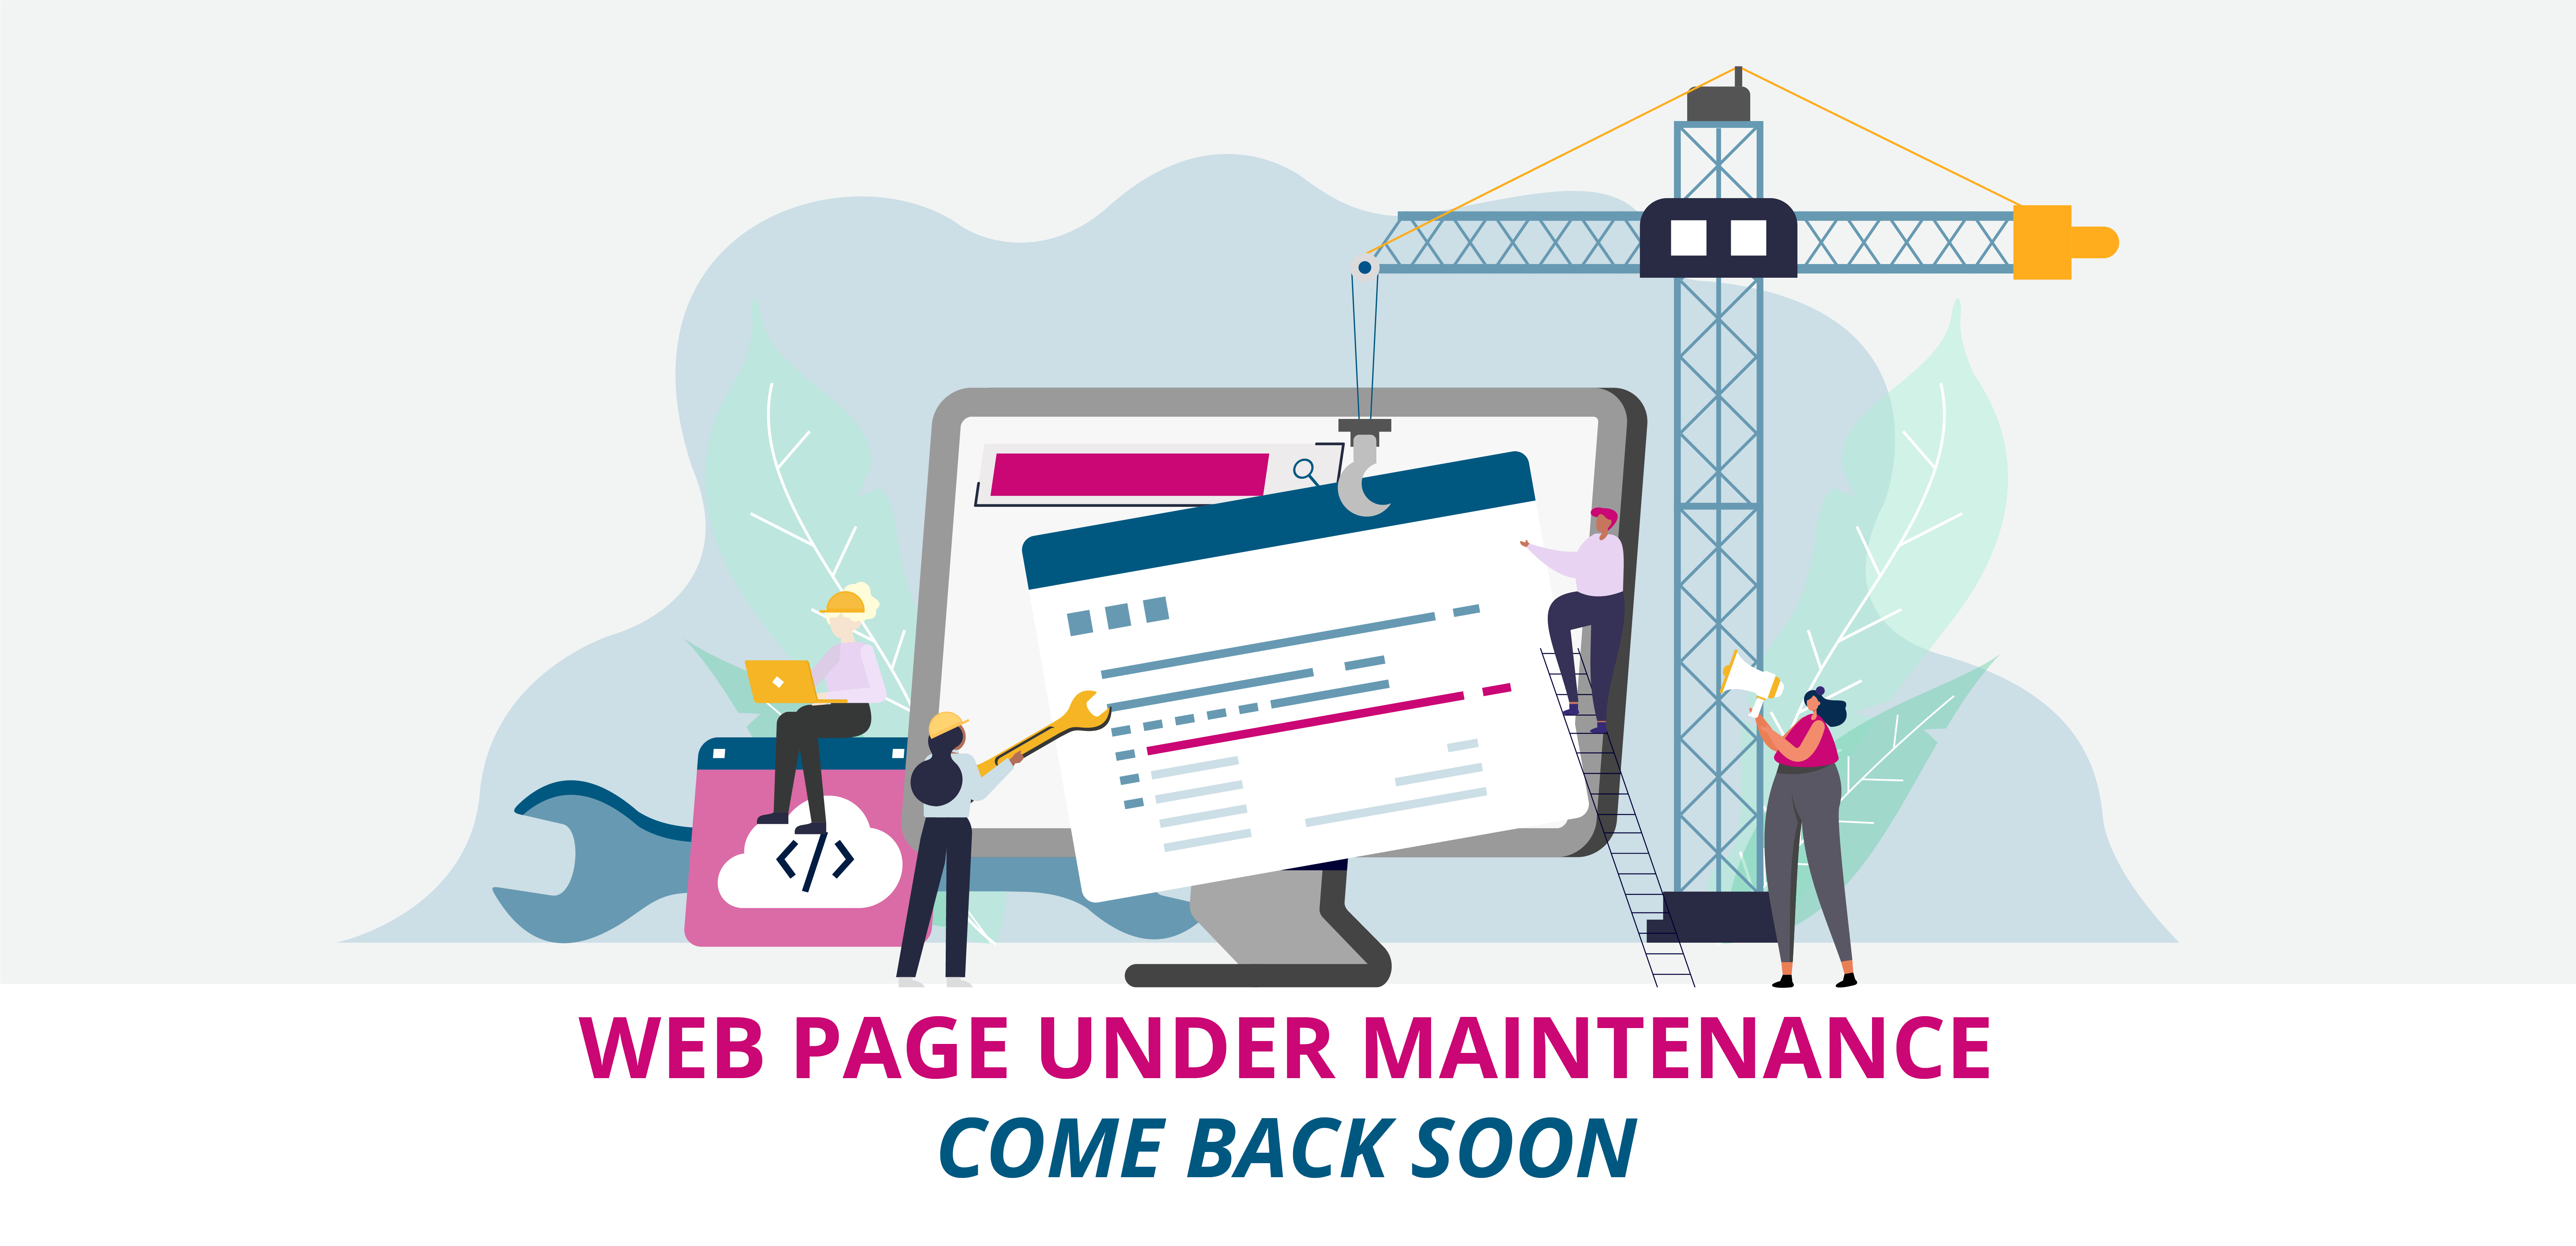 Web page under maintenance